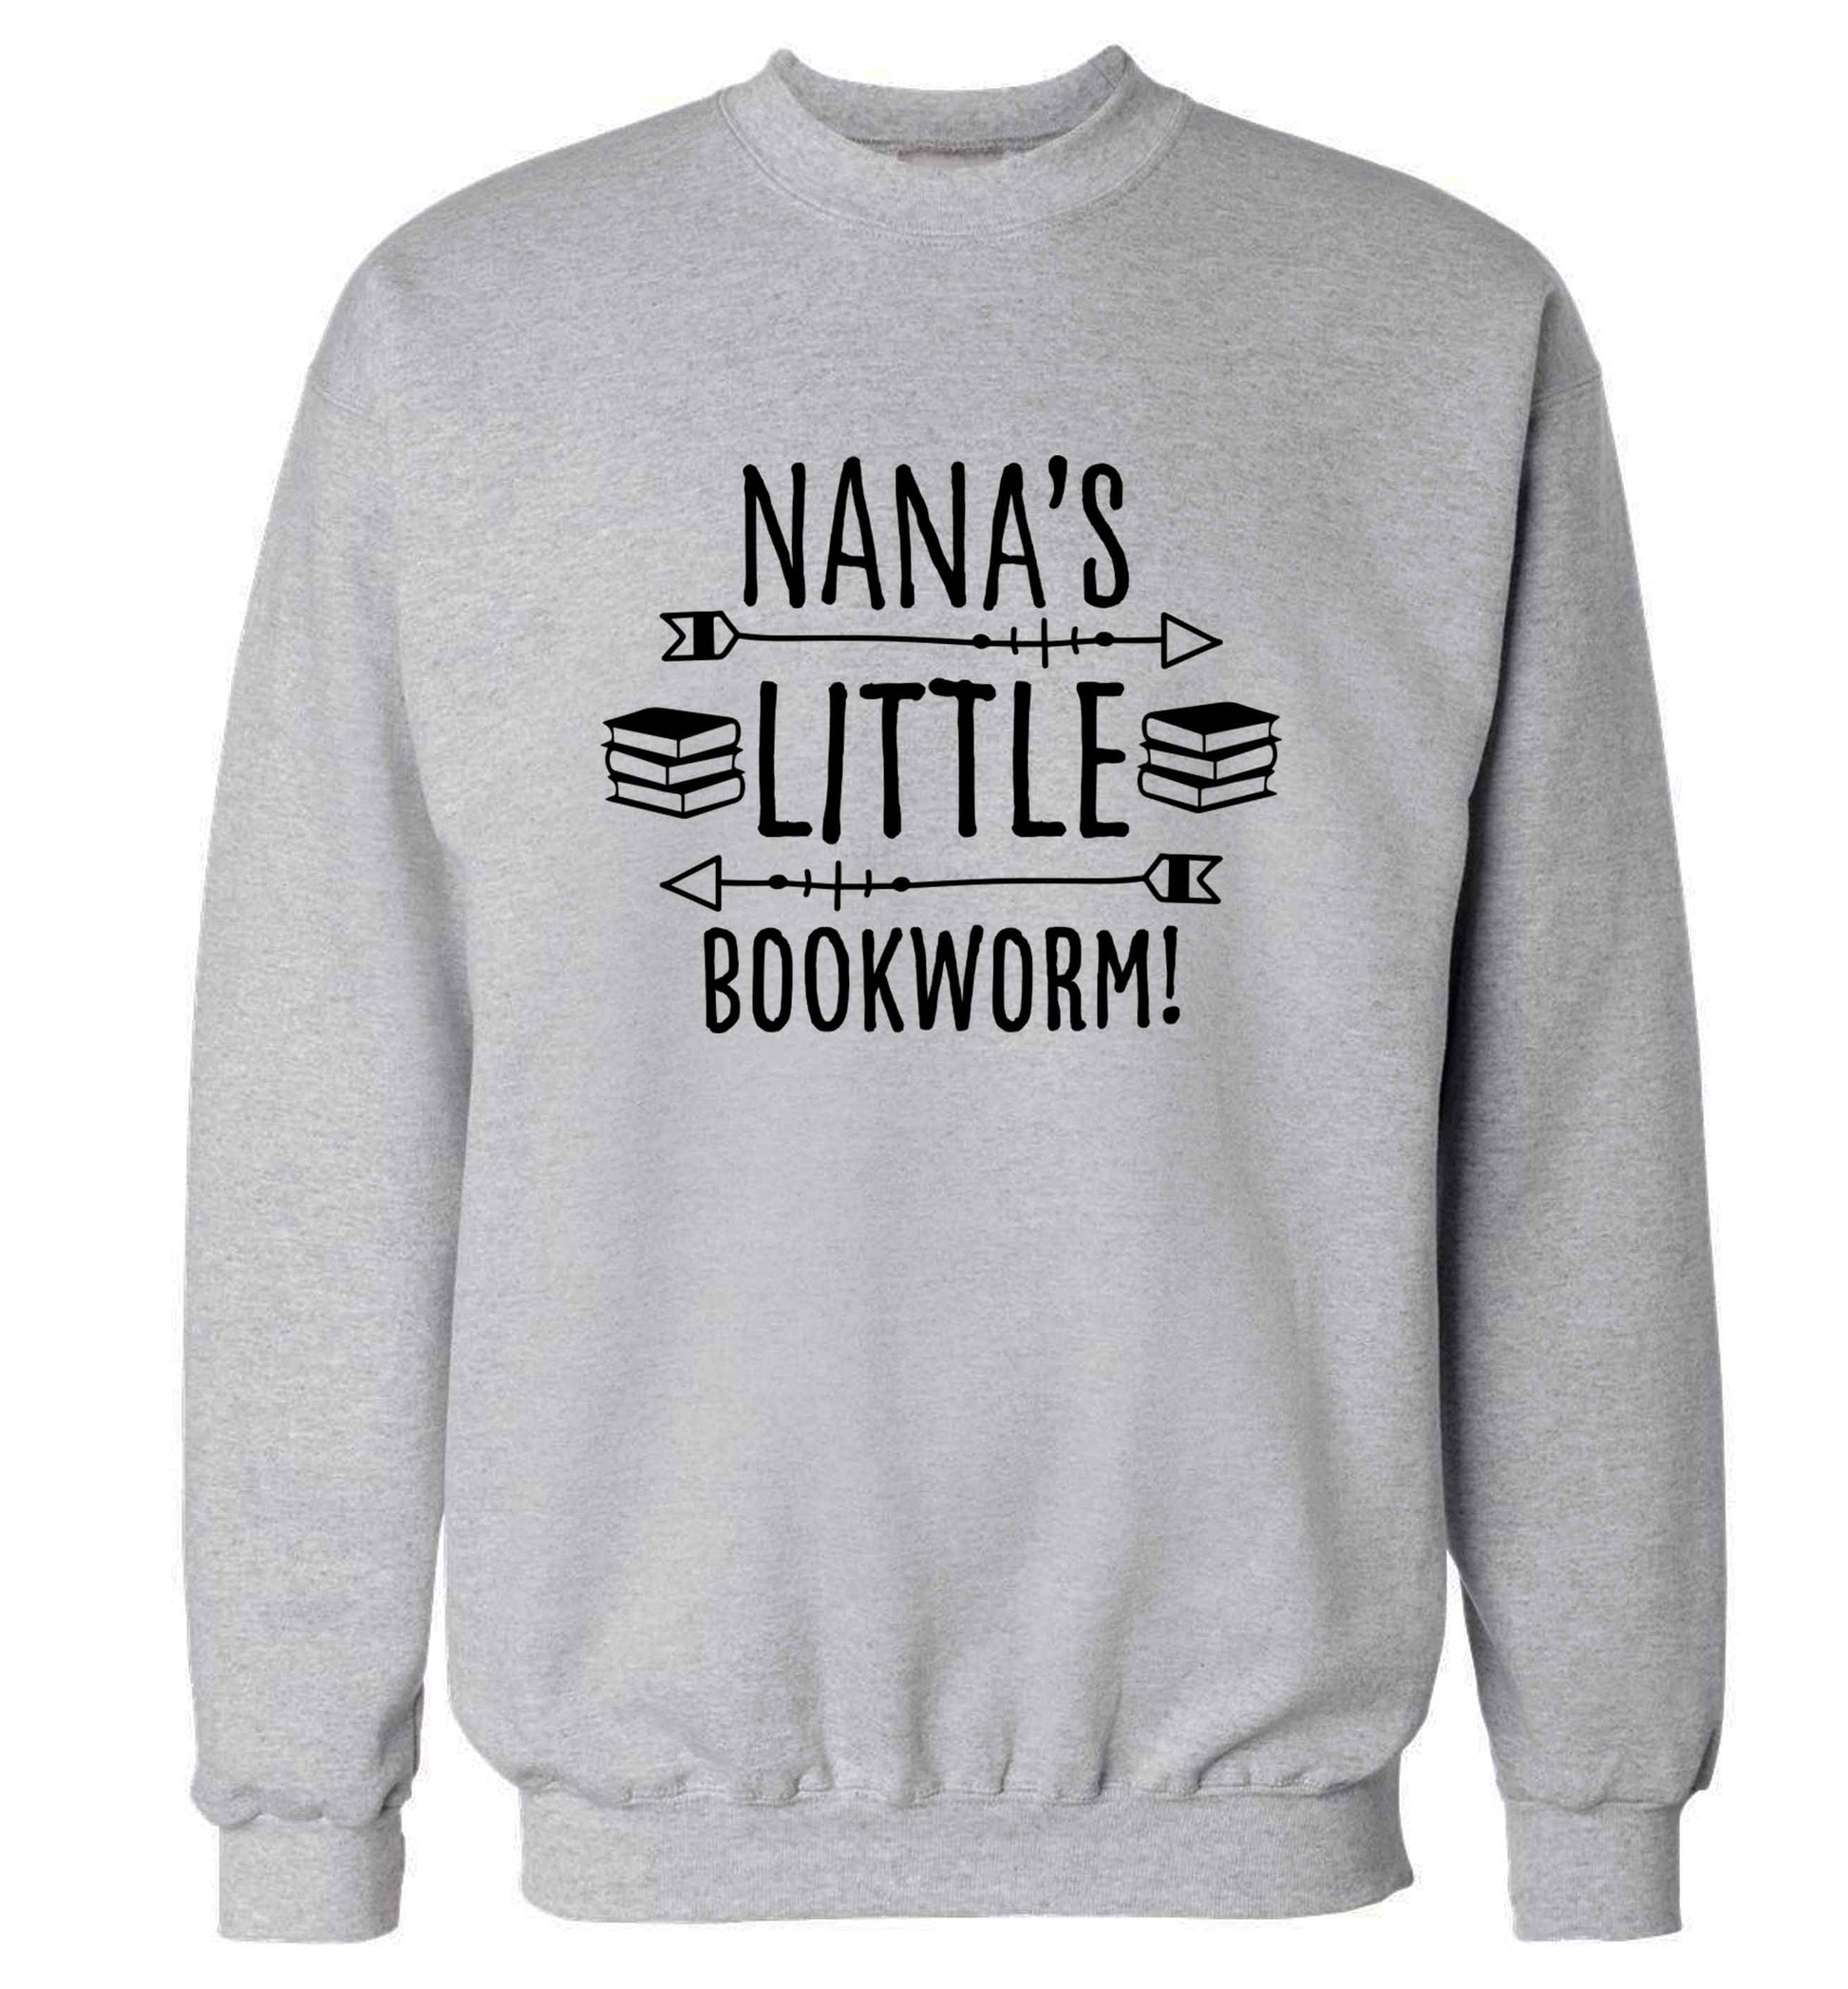 Nana's little bookworm adult's unisex grey sweater 2XL